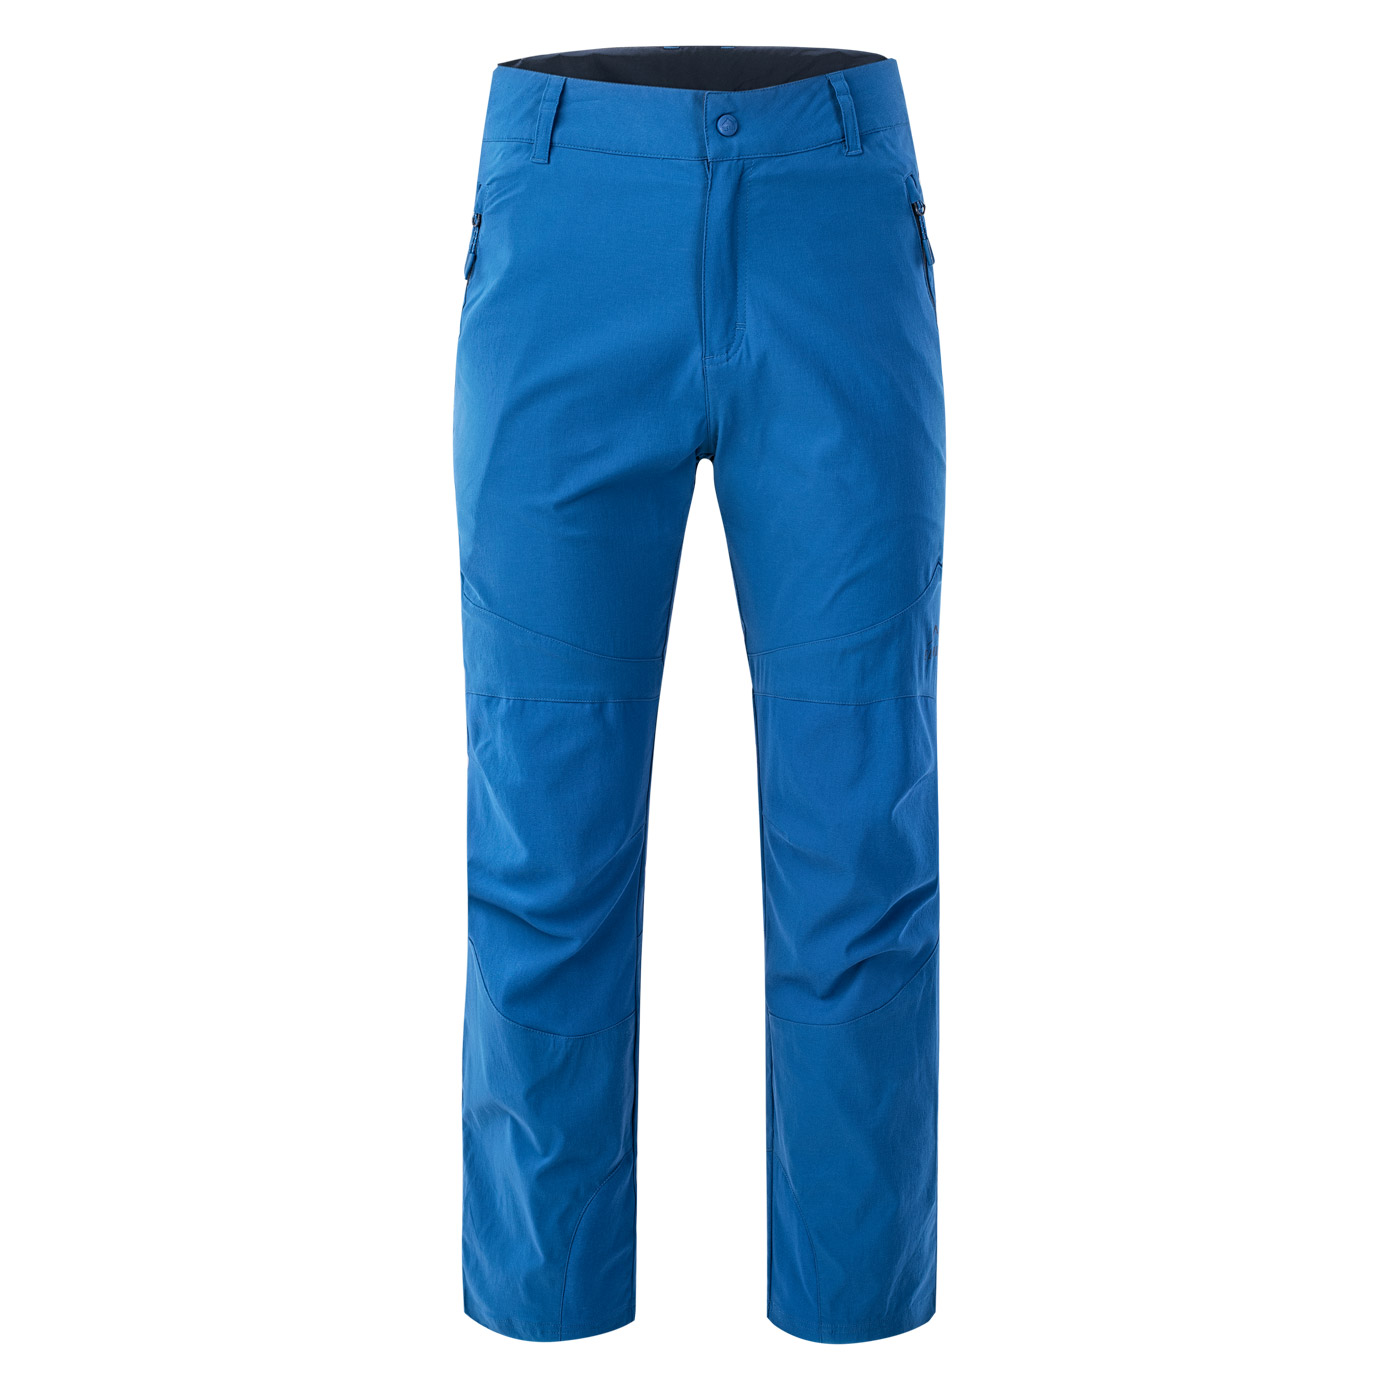 Pánske nohavice GAUDE CLASSIC BLUE/DRESS BLUES